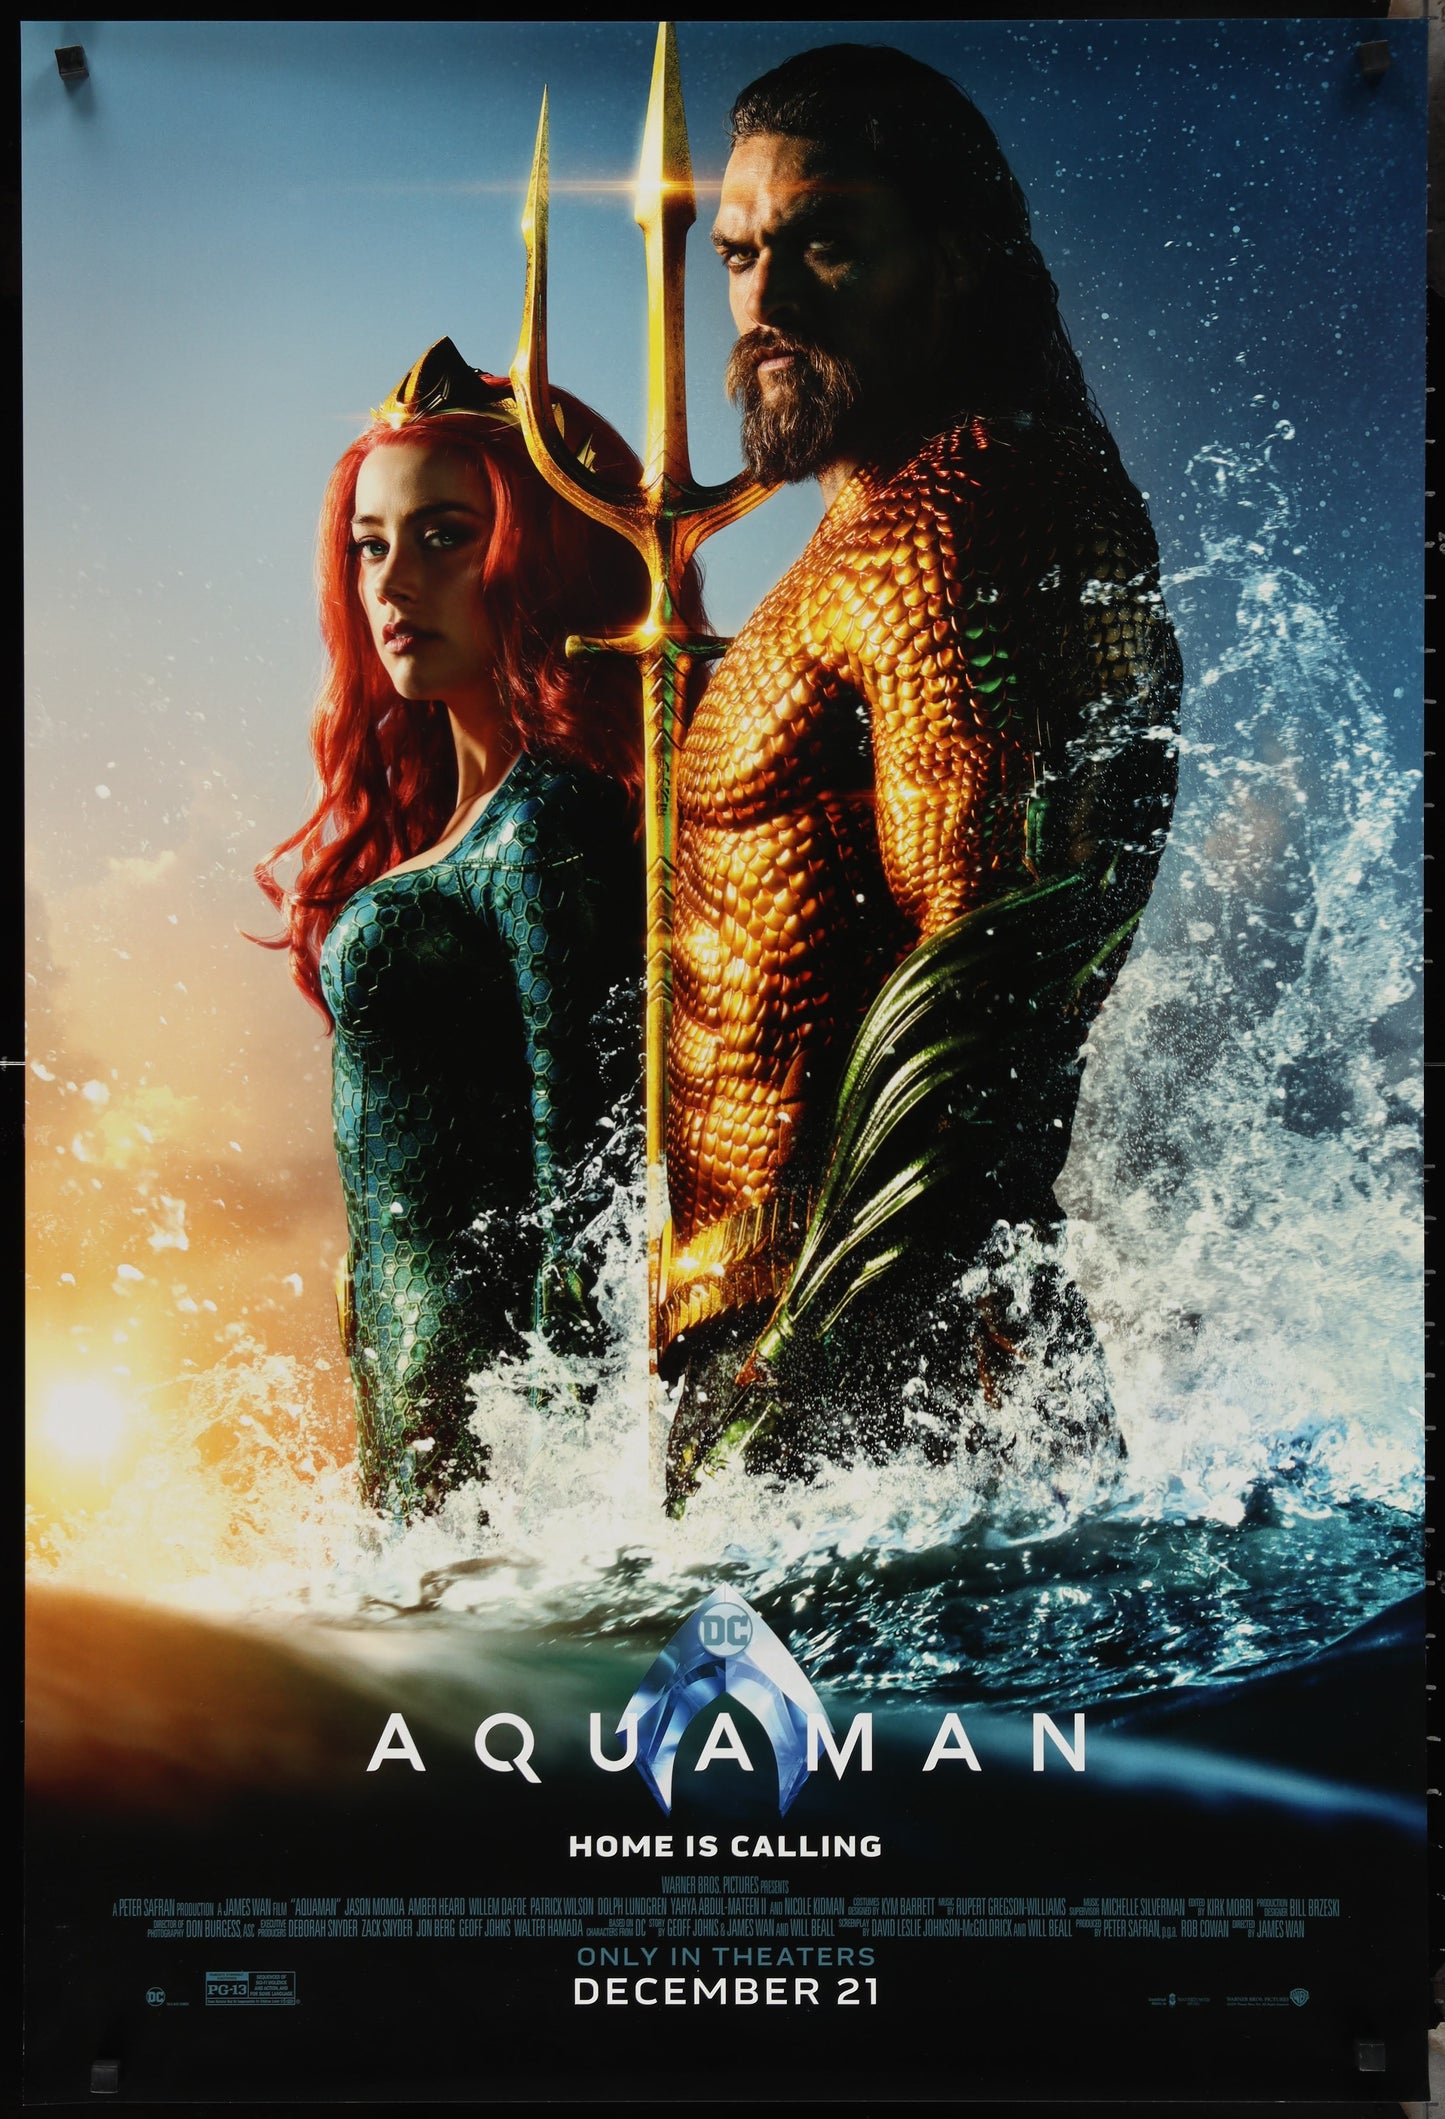 Aquaman US One Sheet (2018) - ORIGINAL RELEASE - posterpalace.com